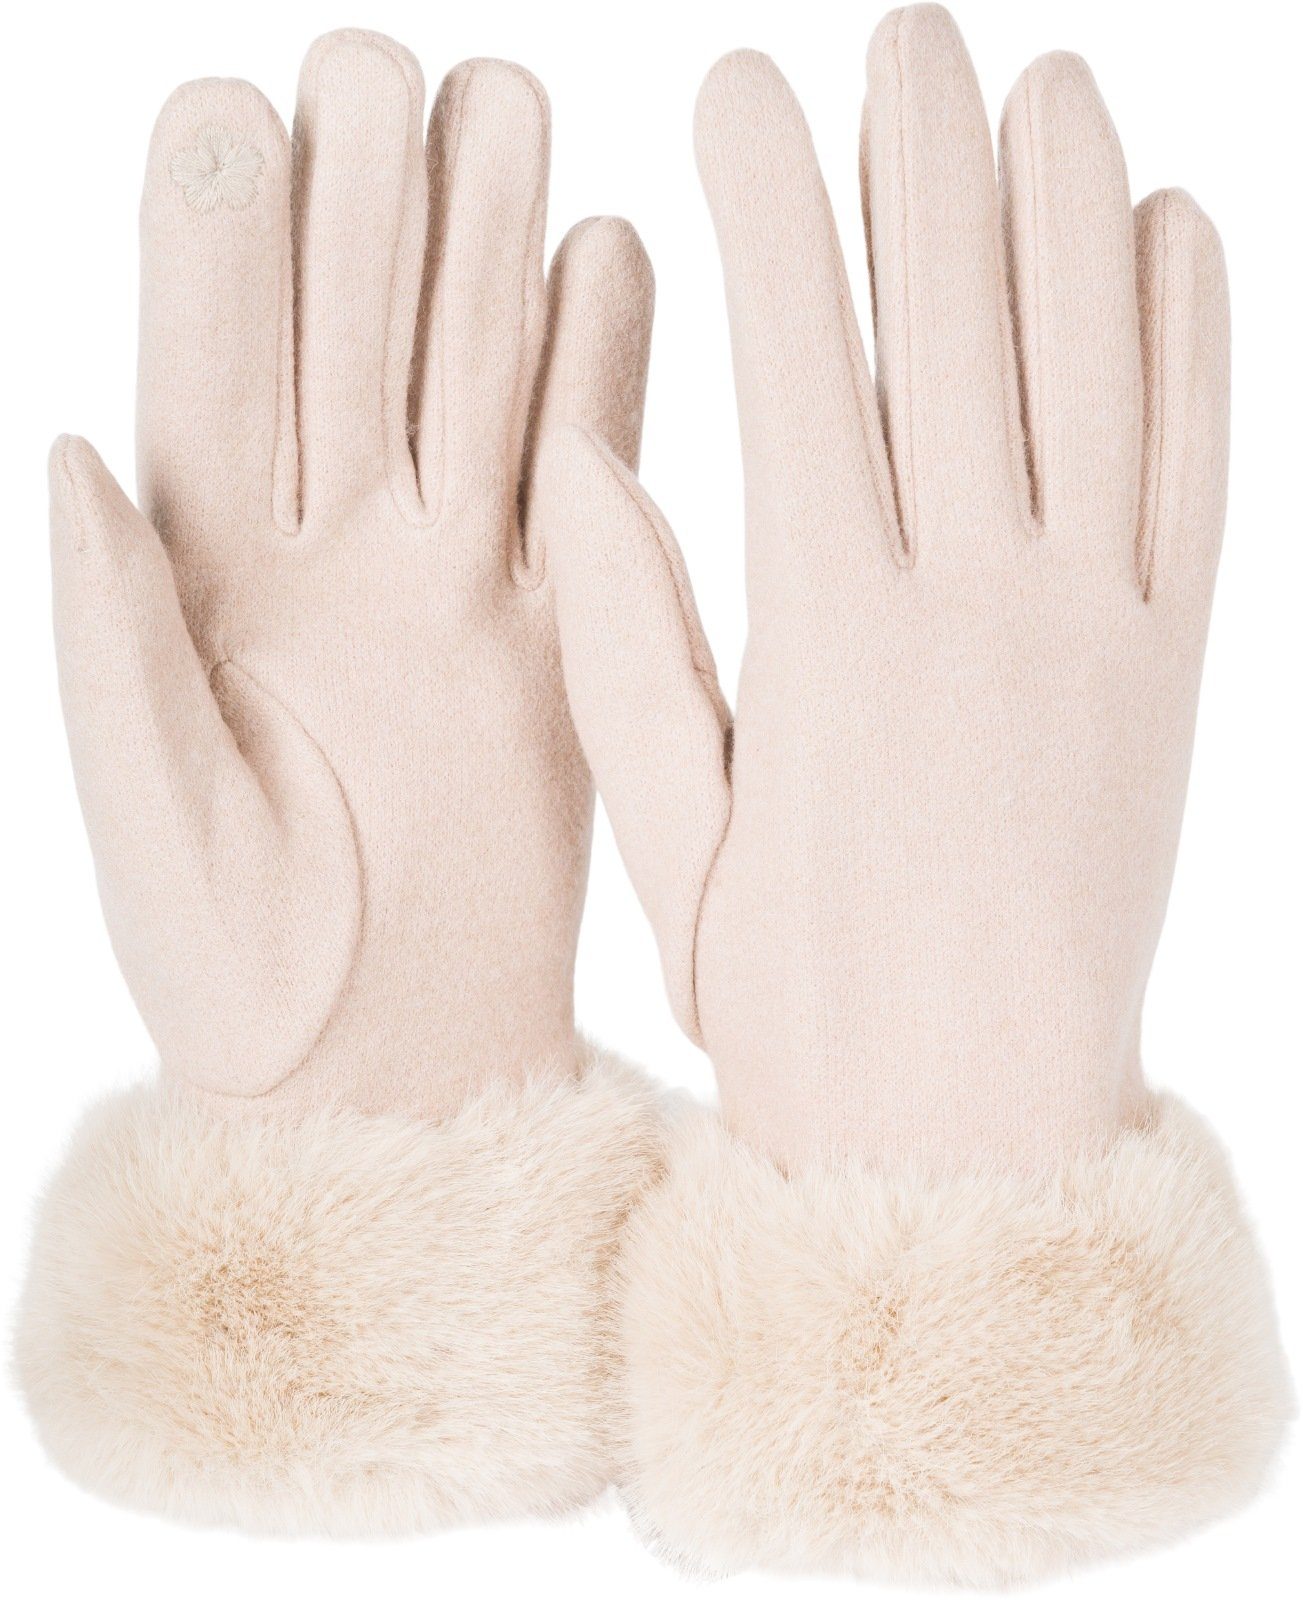 styleBREAKER Fleecehandschuhe Unifarbene Touchscreen Handschuhe mit Kunstfell Beige